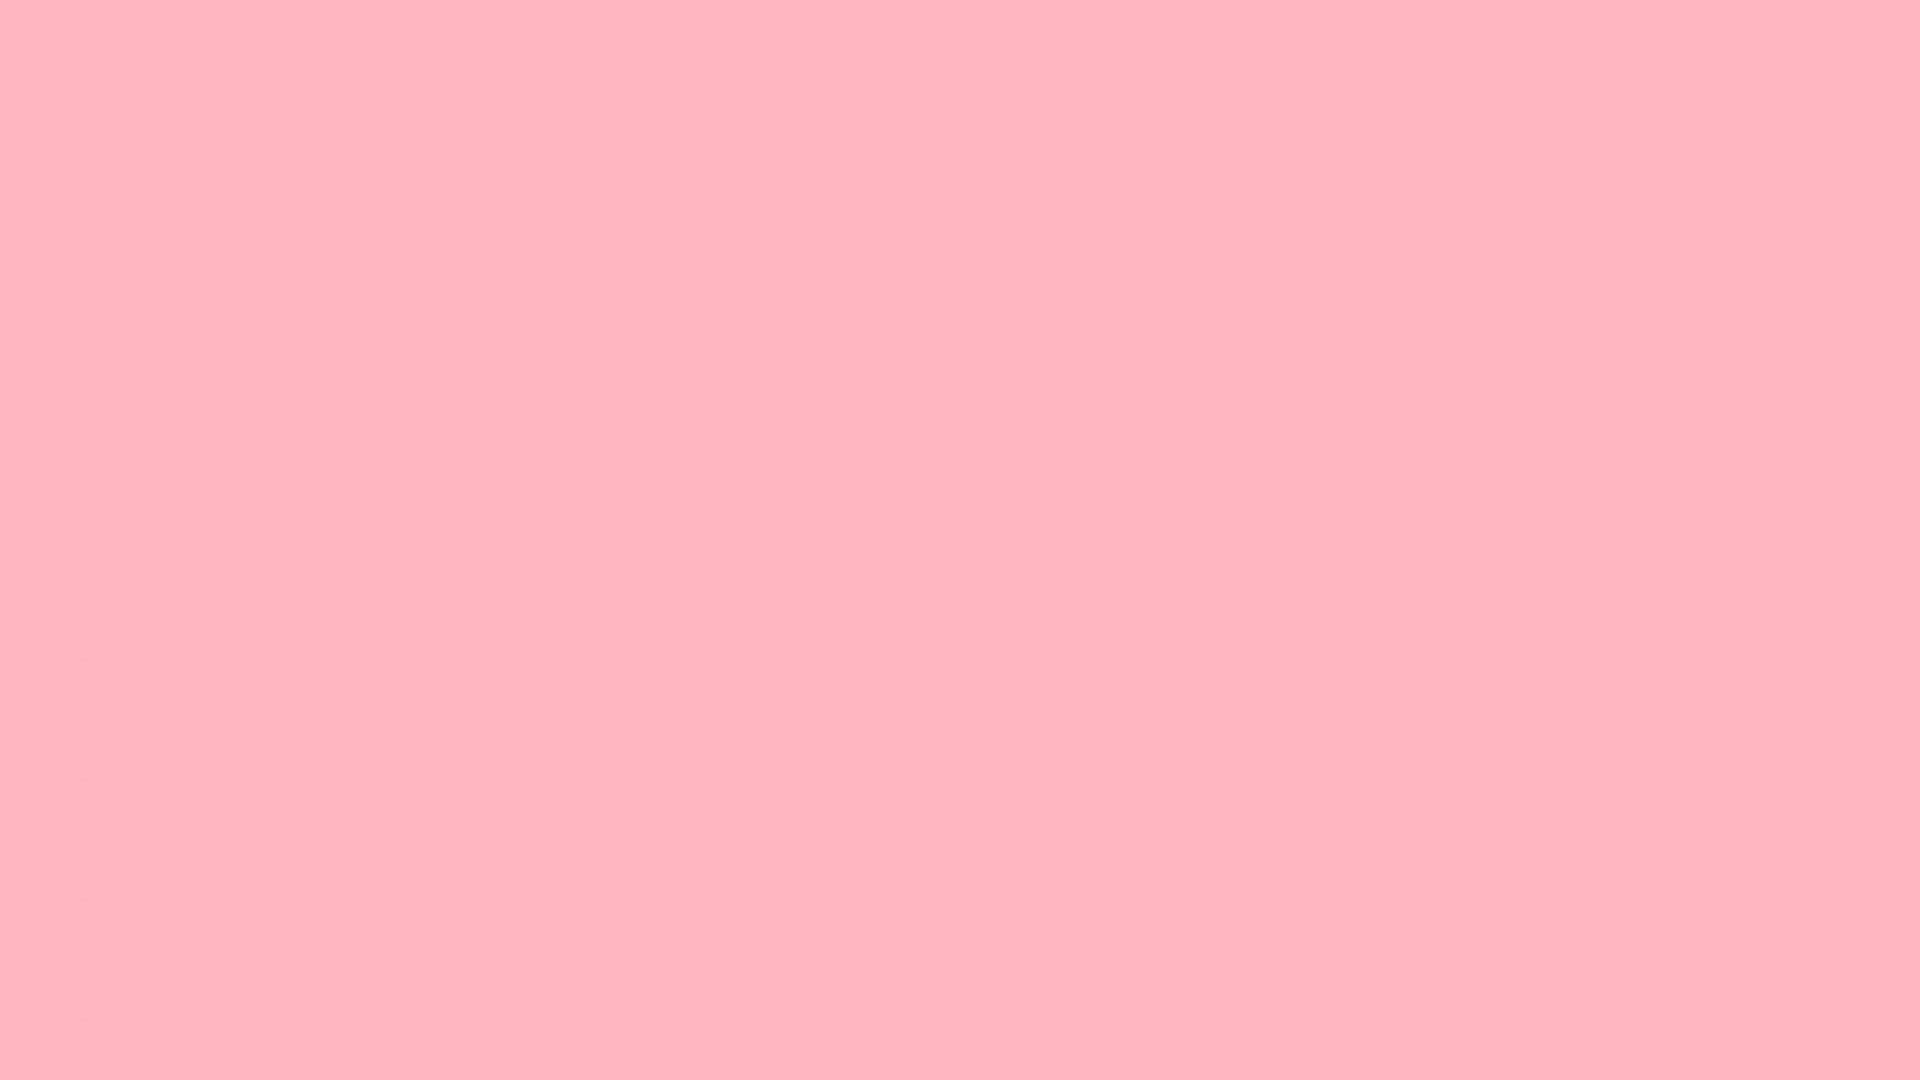 Free download Light Pink Solid Color Background Image Picture Becuo [2048x2048] for your Desktop, Mobile & Tablet. Explore Pink Color Pink Wallpaper. Pink Wallpaper, Pink Wallpaper Desktop, Pink Background Wallpaper